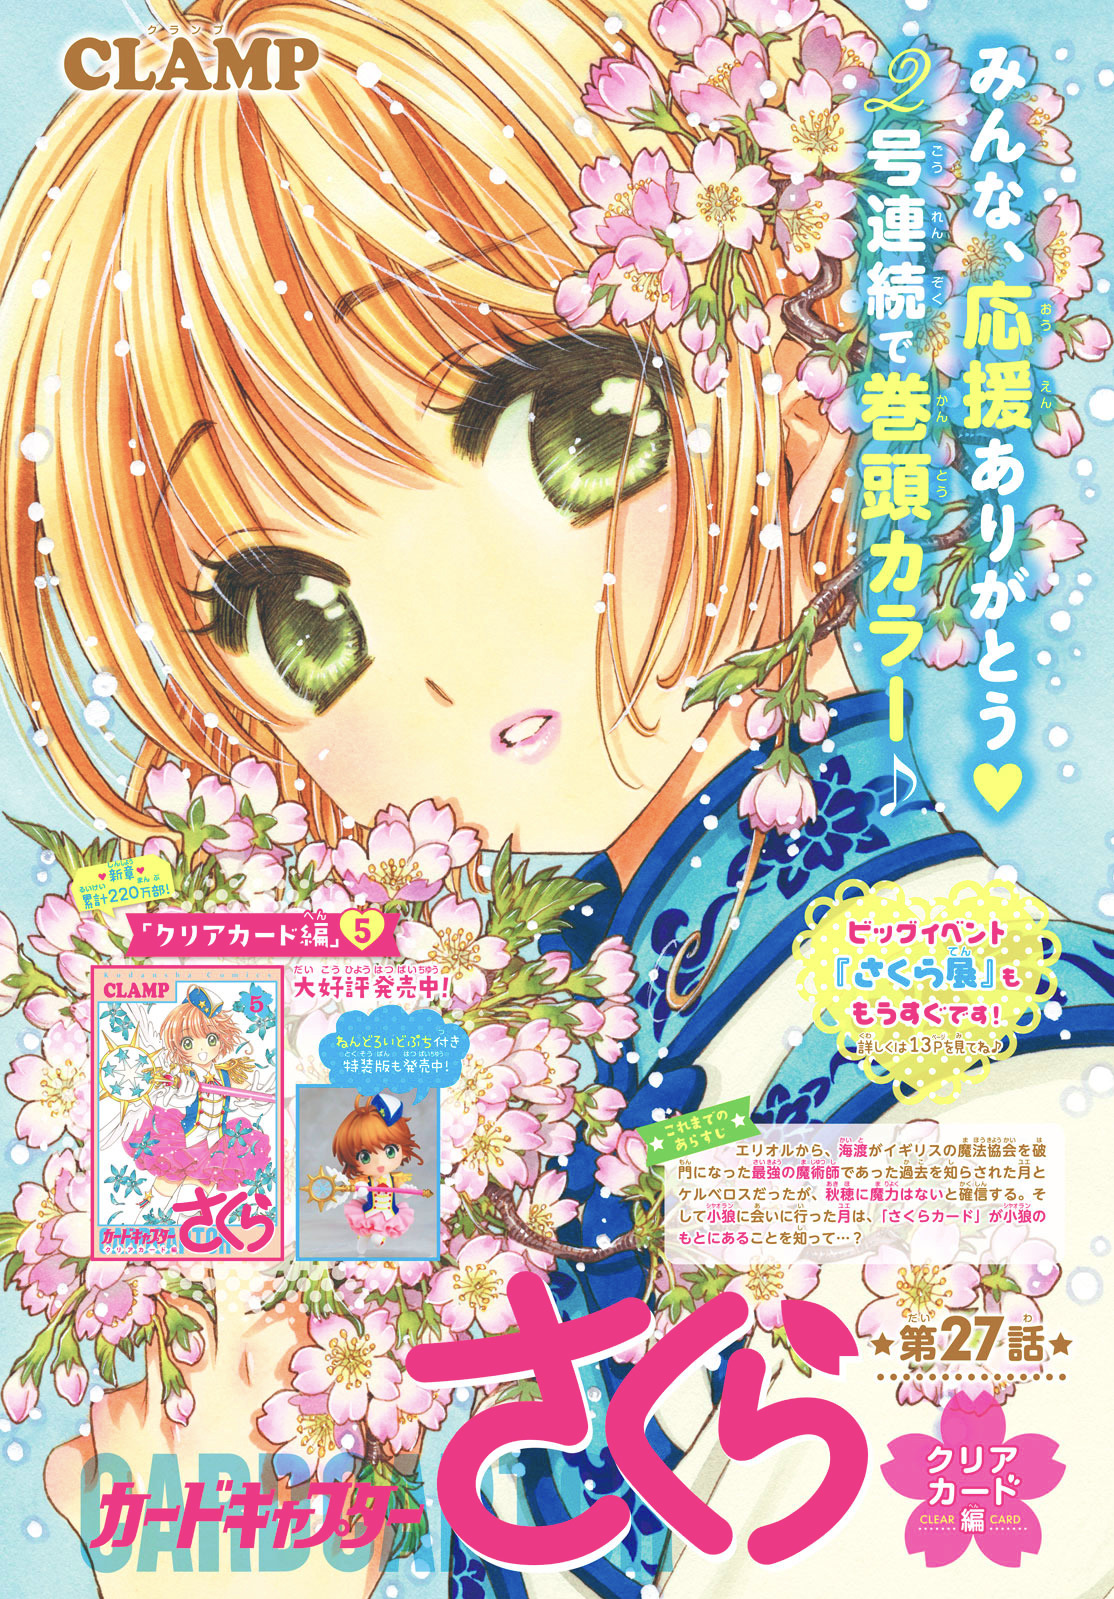 Card Captor Sakura et autres mangas [CLAMP] - Page 32 Tumblr_pfzaijKltg1qmkgeno1_1280